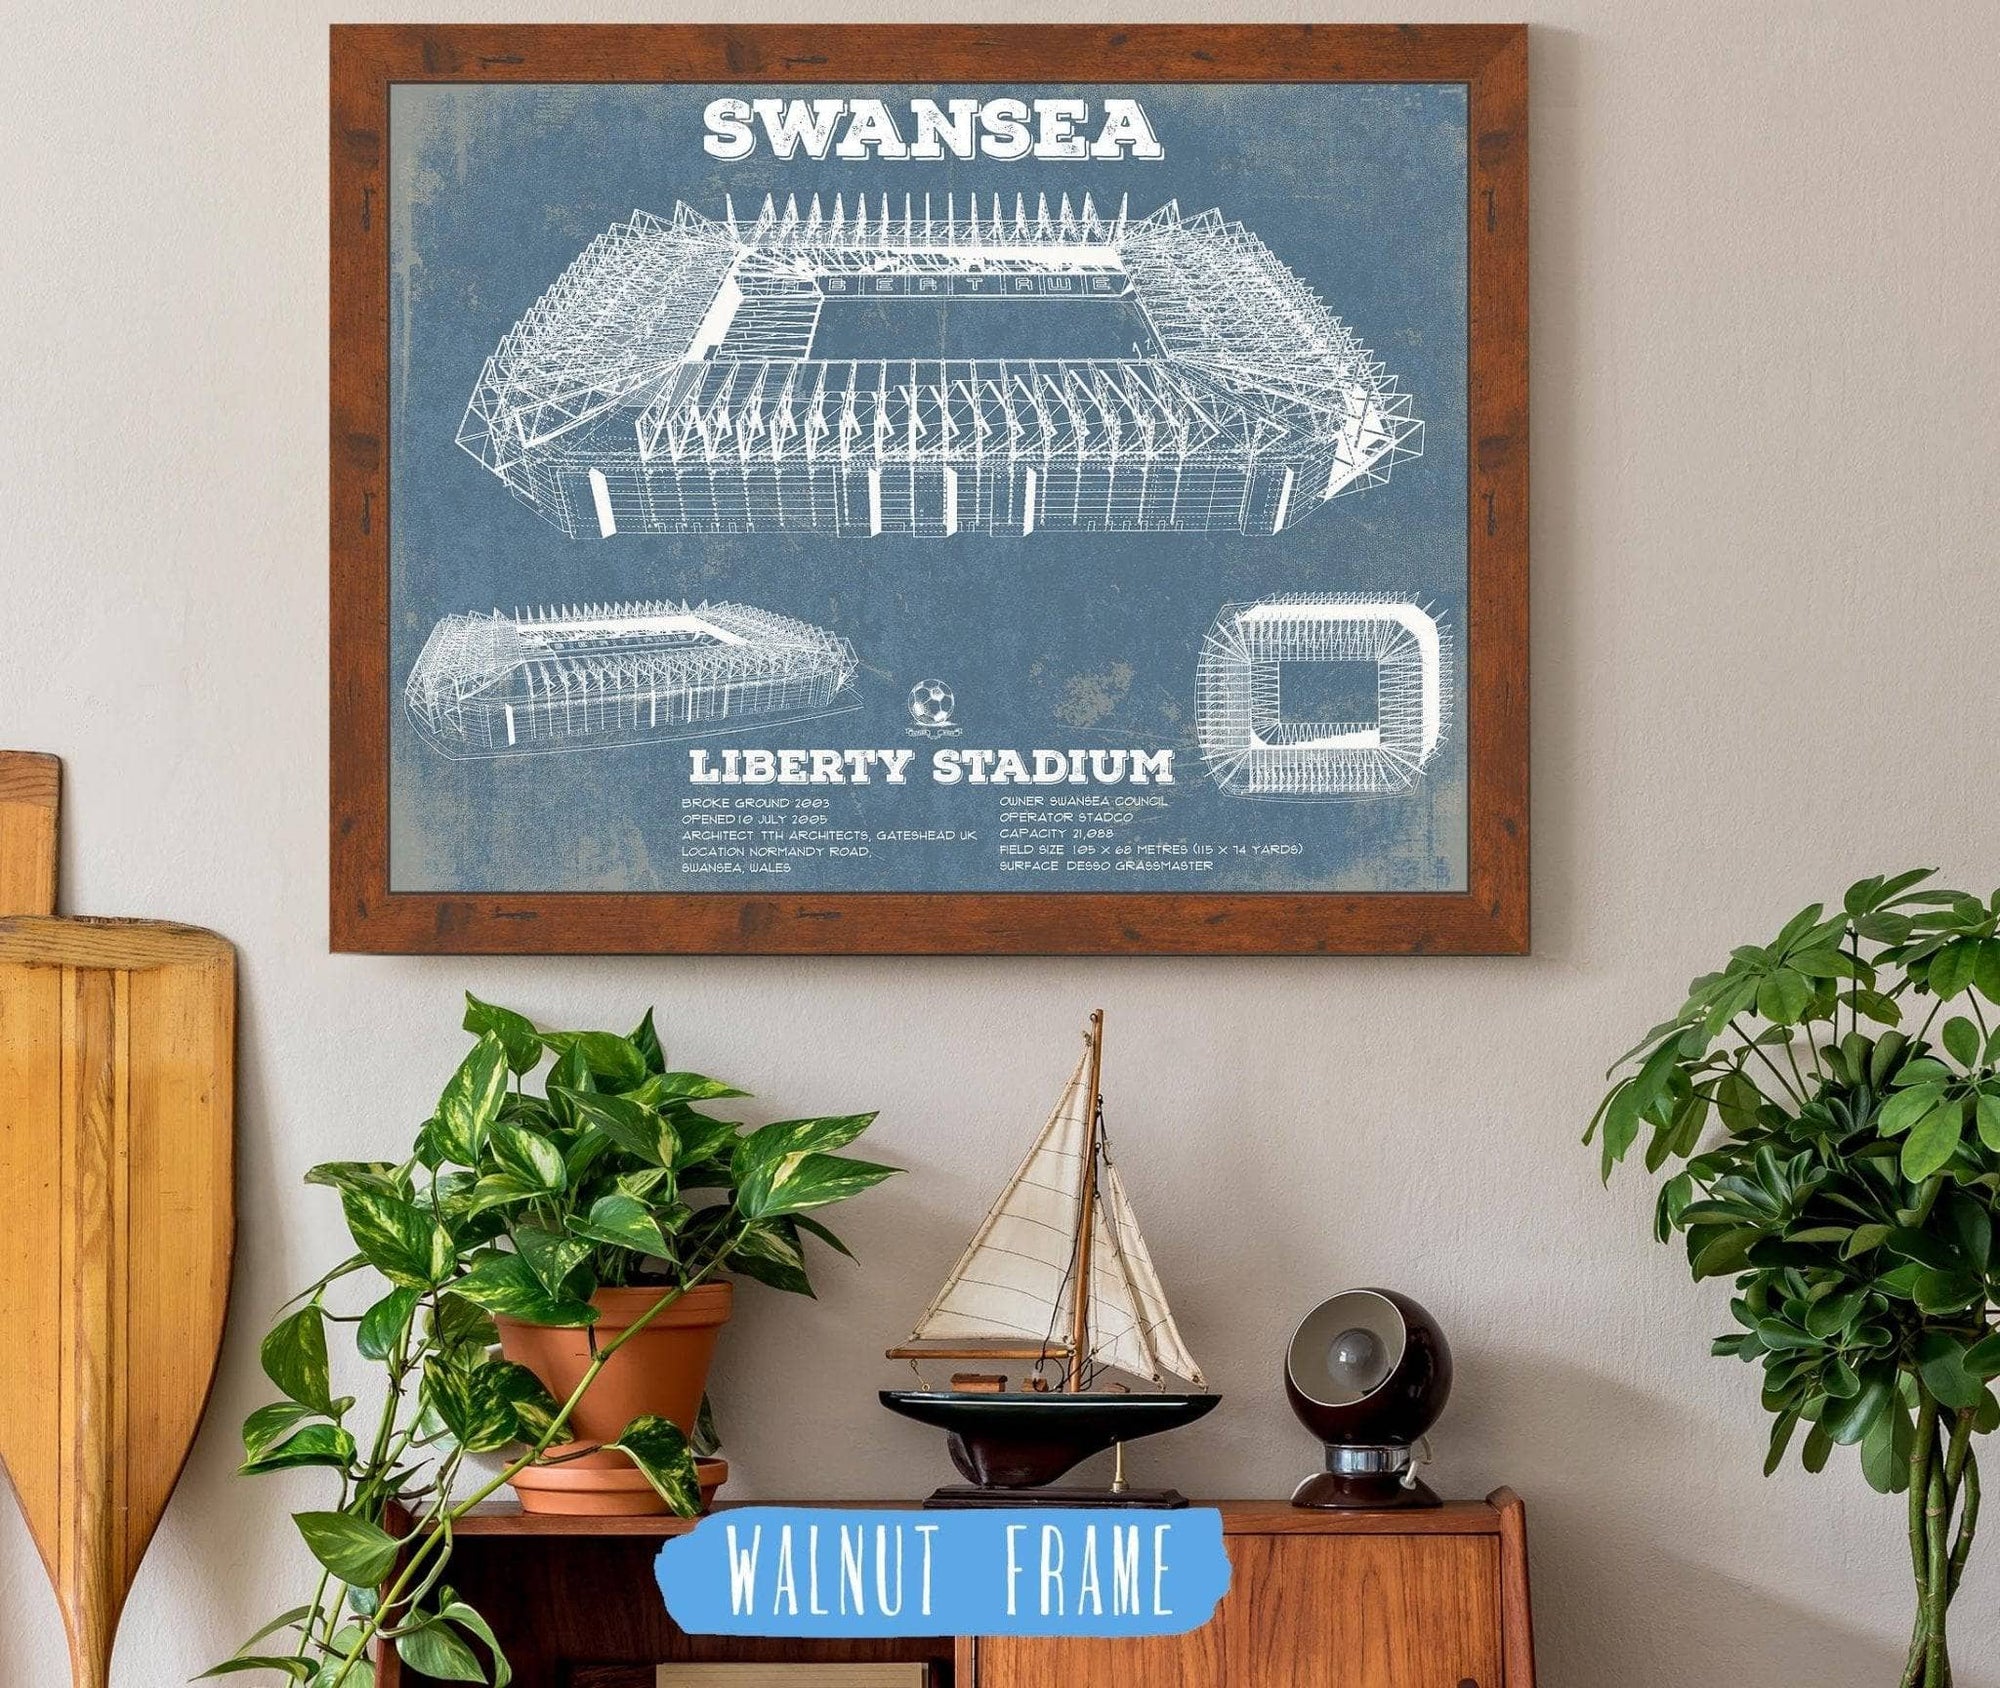 Cutler West Soccer Collection 14" x 11" / Walnut Frame Swansea City Football Club- Liberty Stadium Soccer Print 730702222_74850